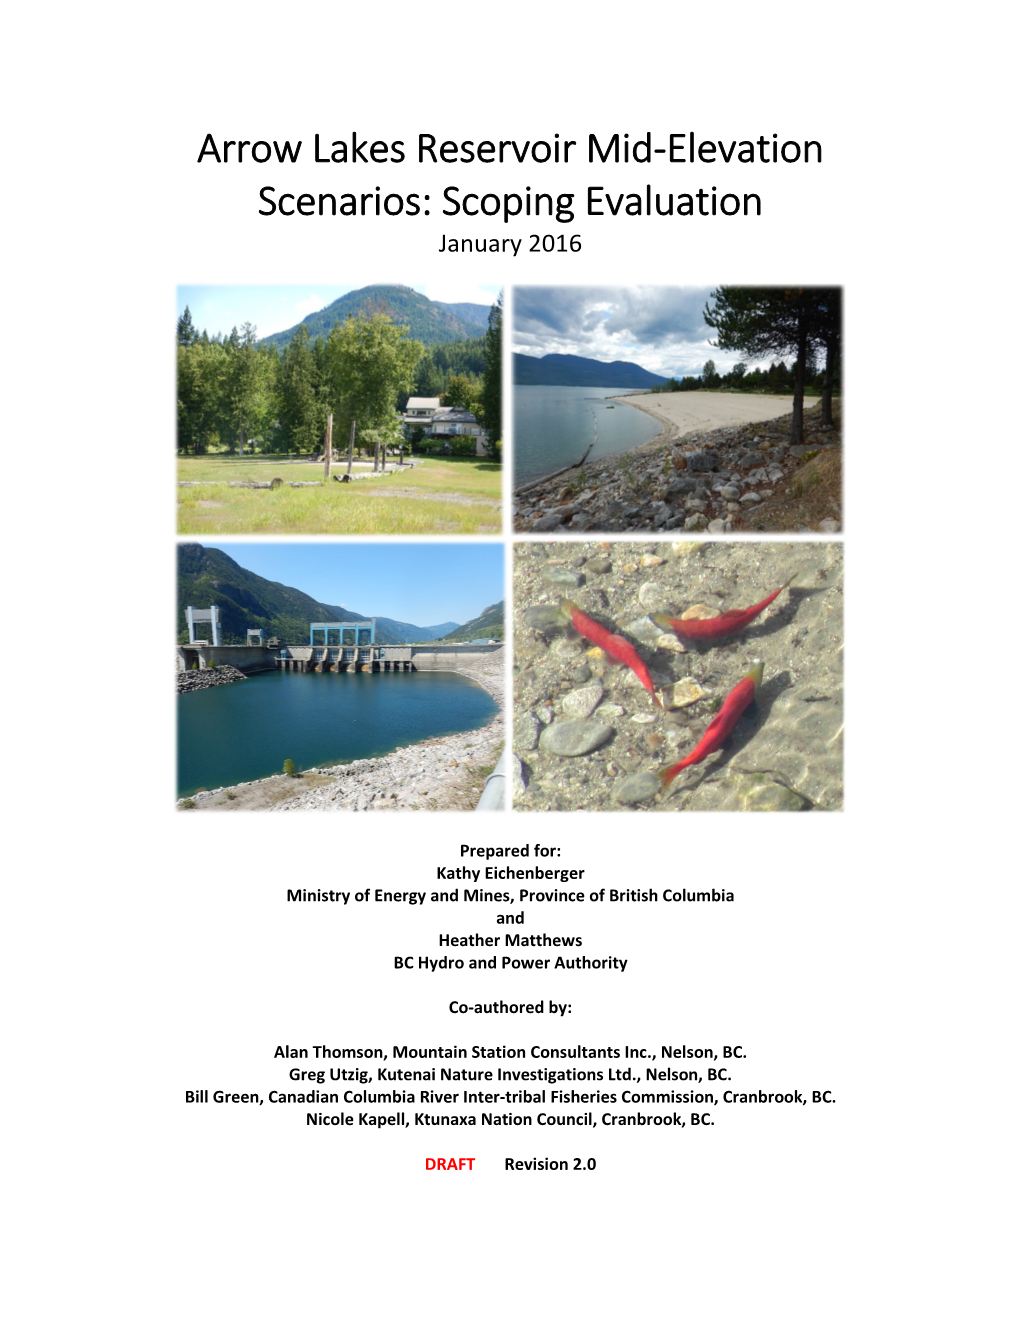 Arrow Lakes Reservoir Mid-Elevation Scenarios: Scoping Evaluation January 2016